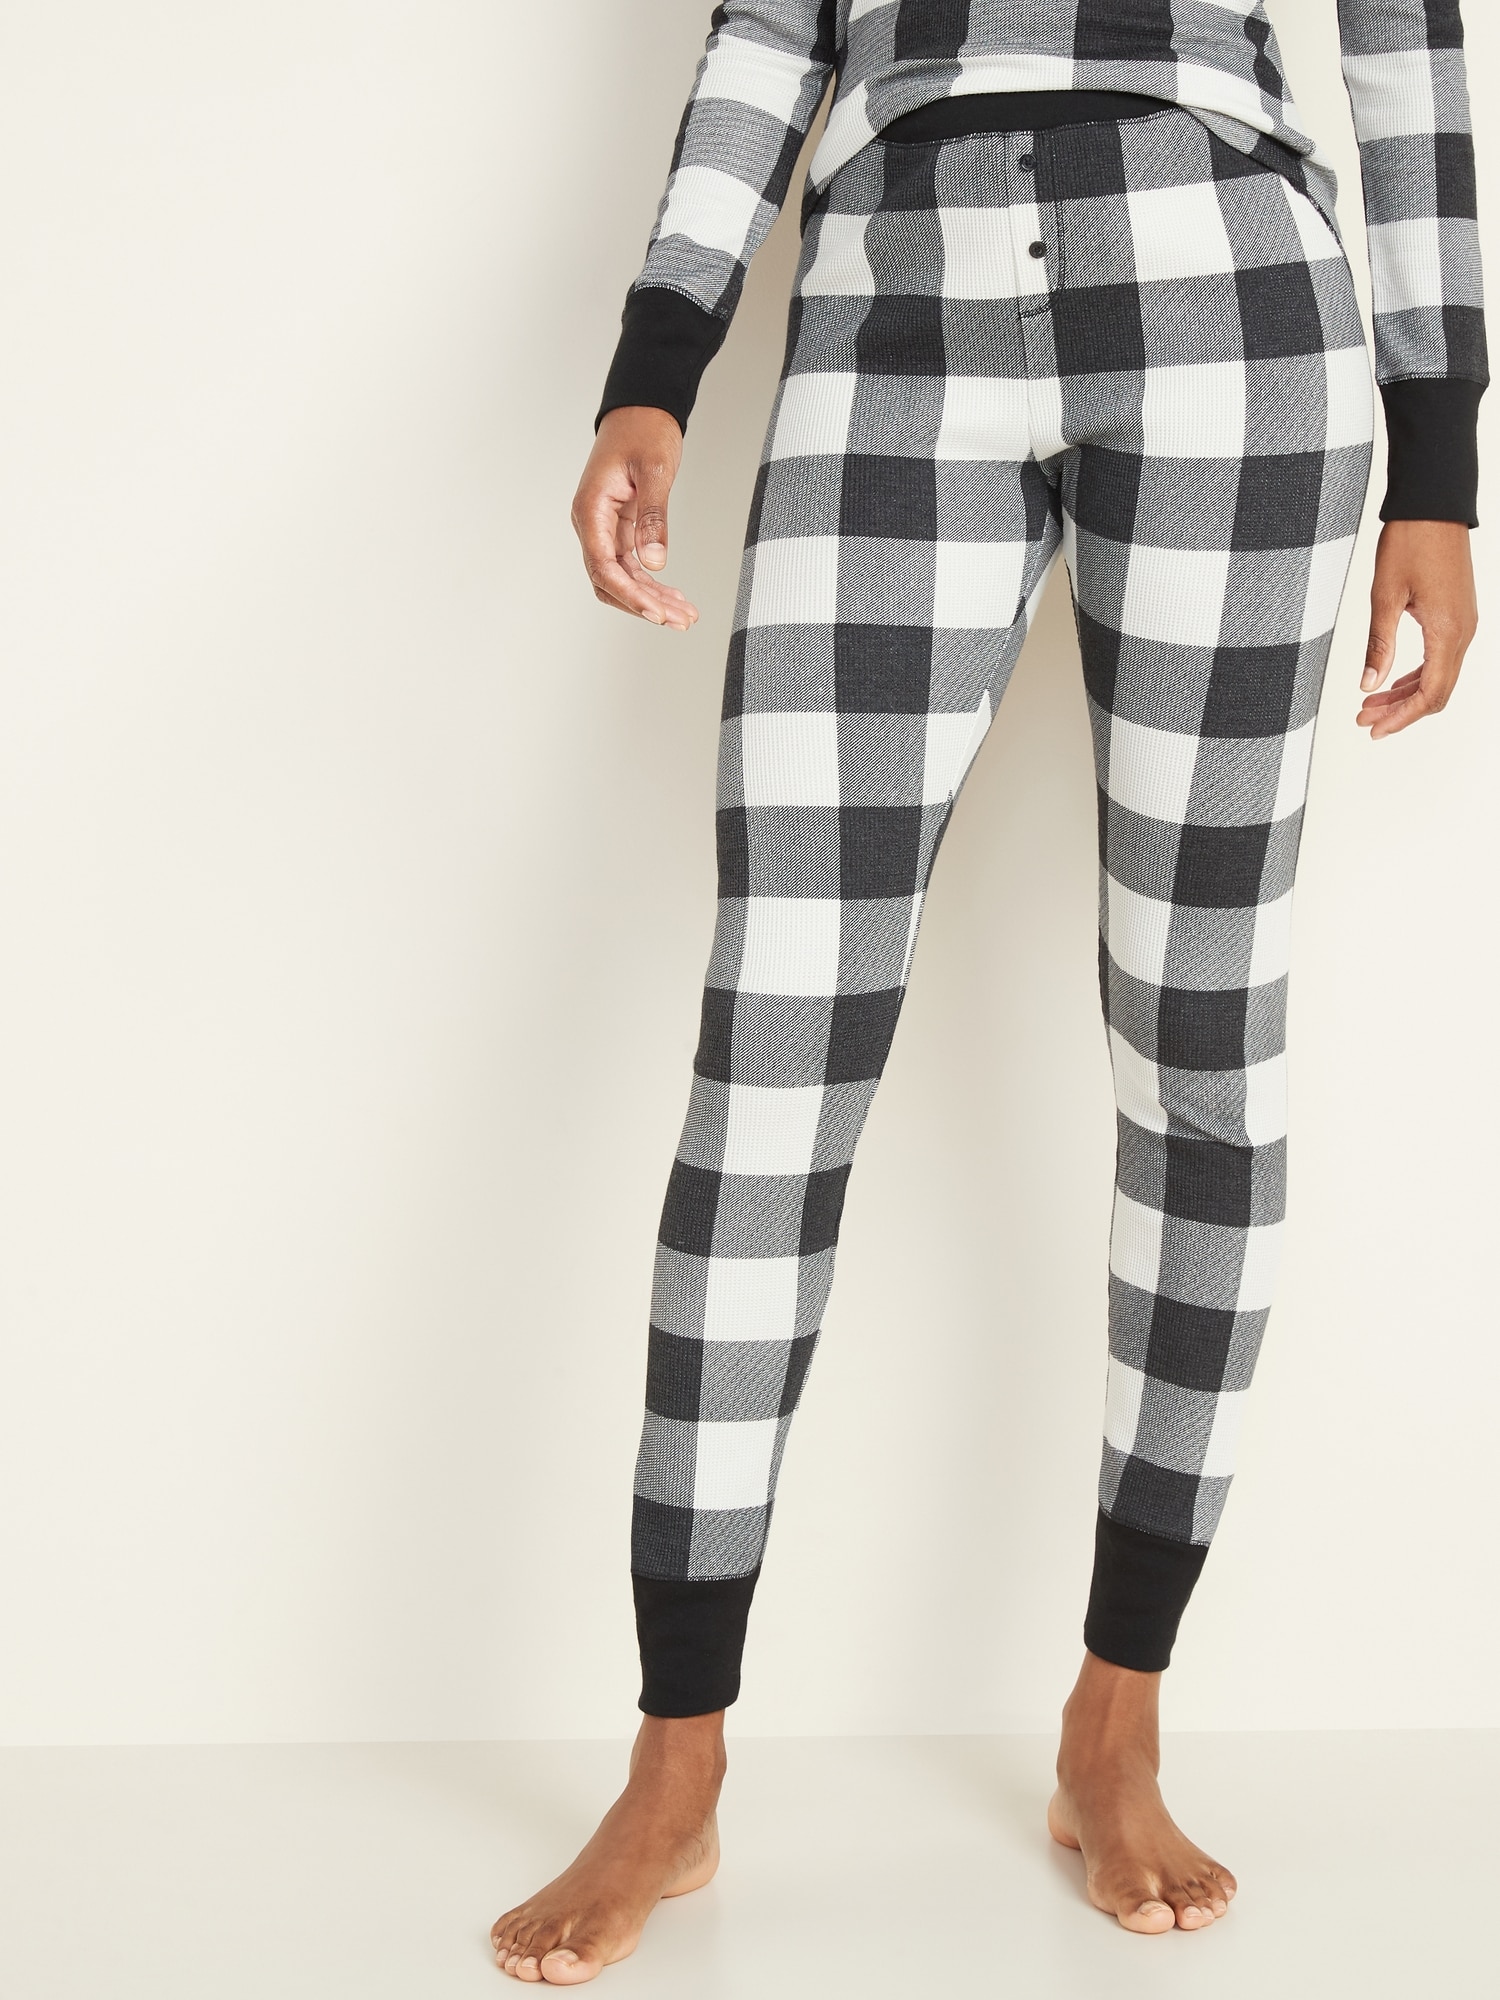 Thermal-Knit Pajama Pants for Women